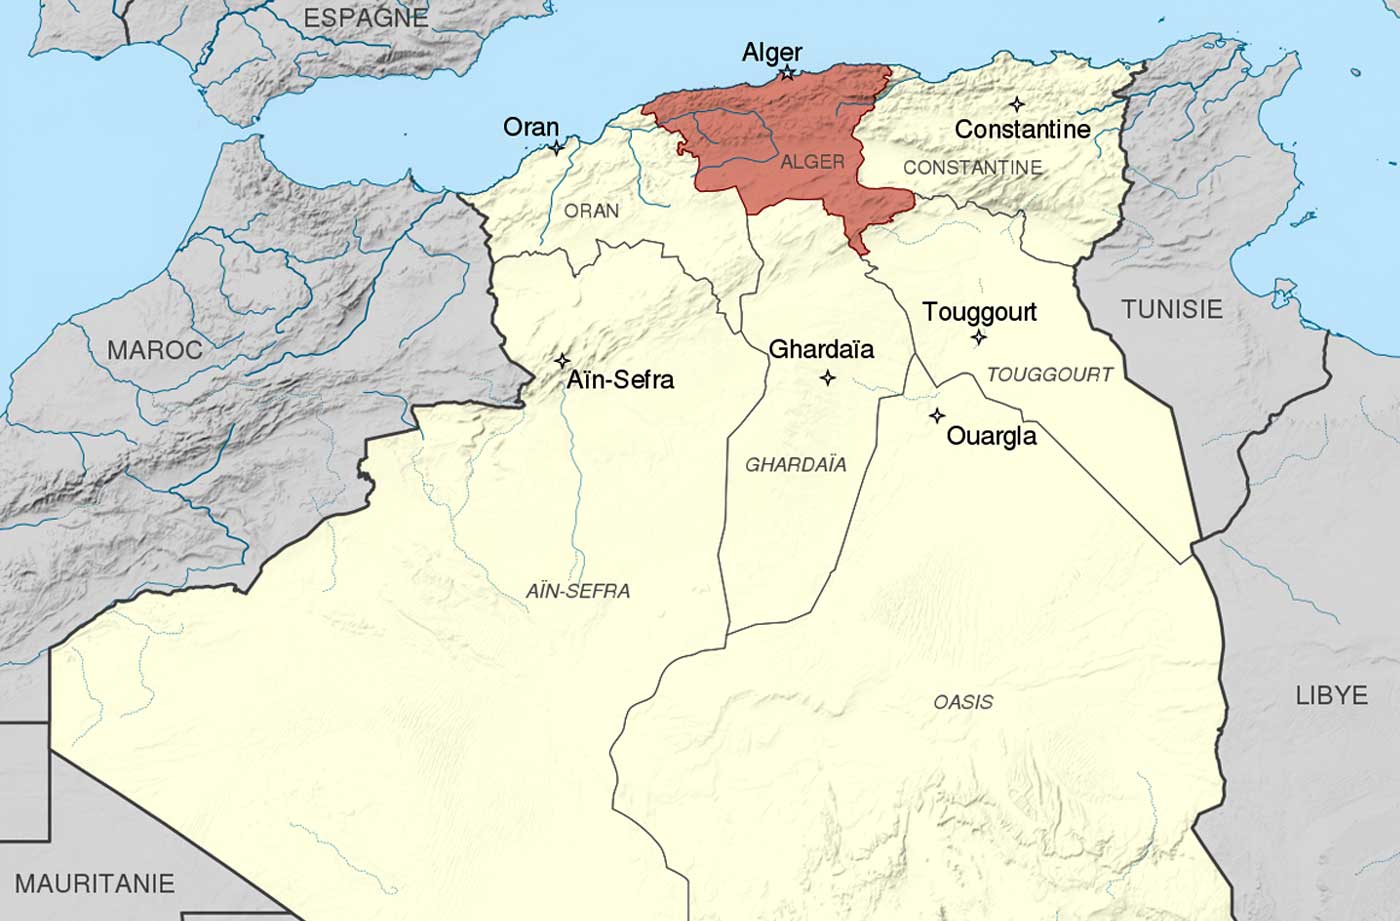 Location of Alger City on Algeria Map